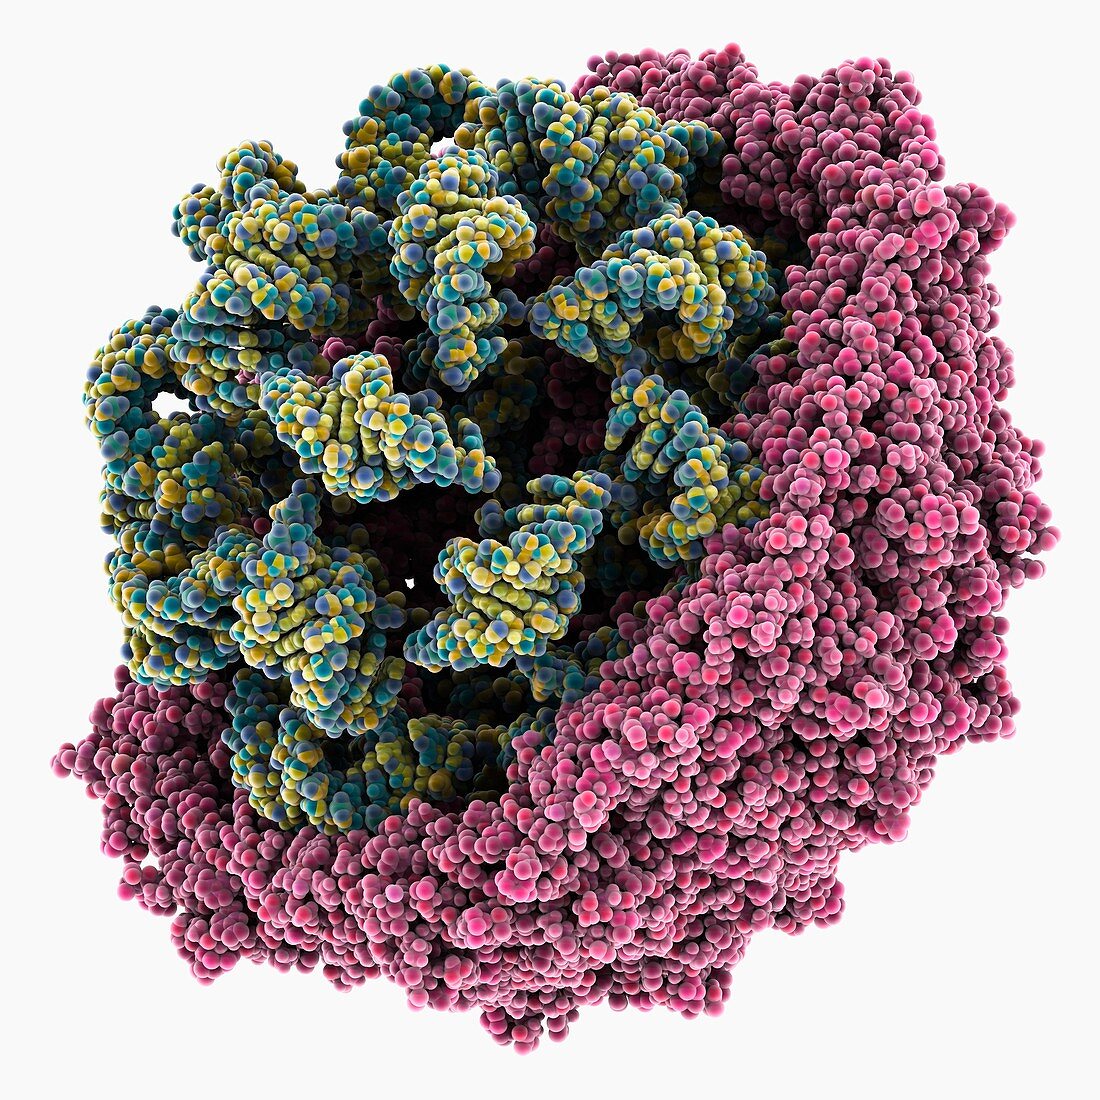 Tobacco mosaic virus capsid, molecular model